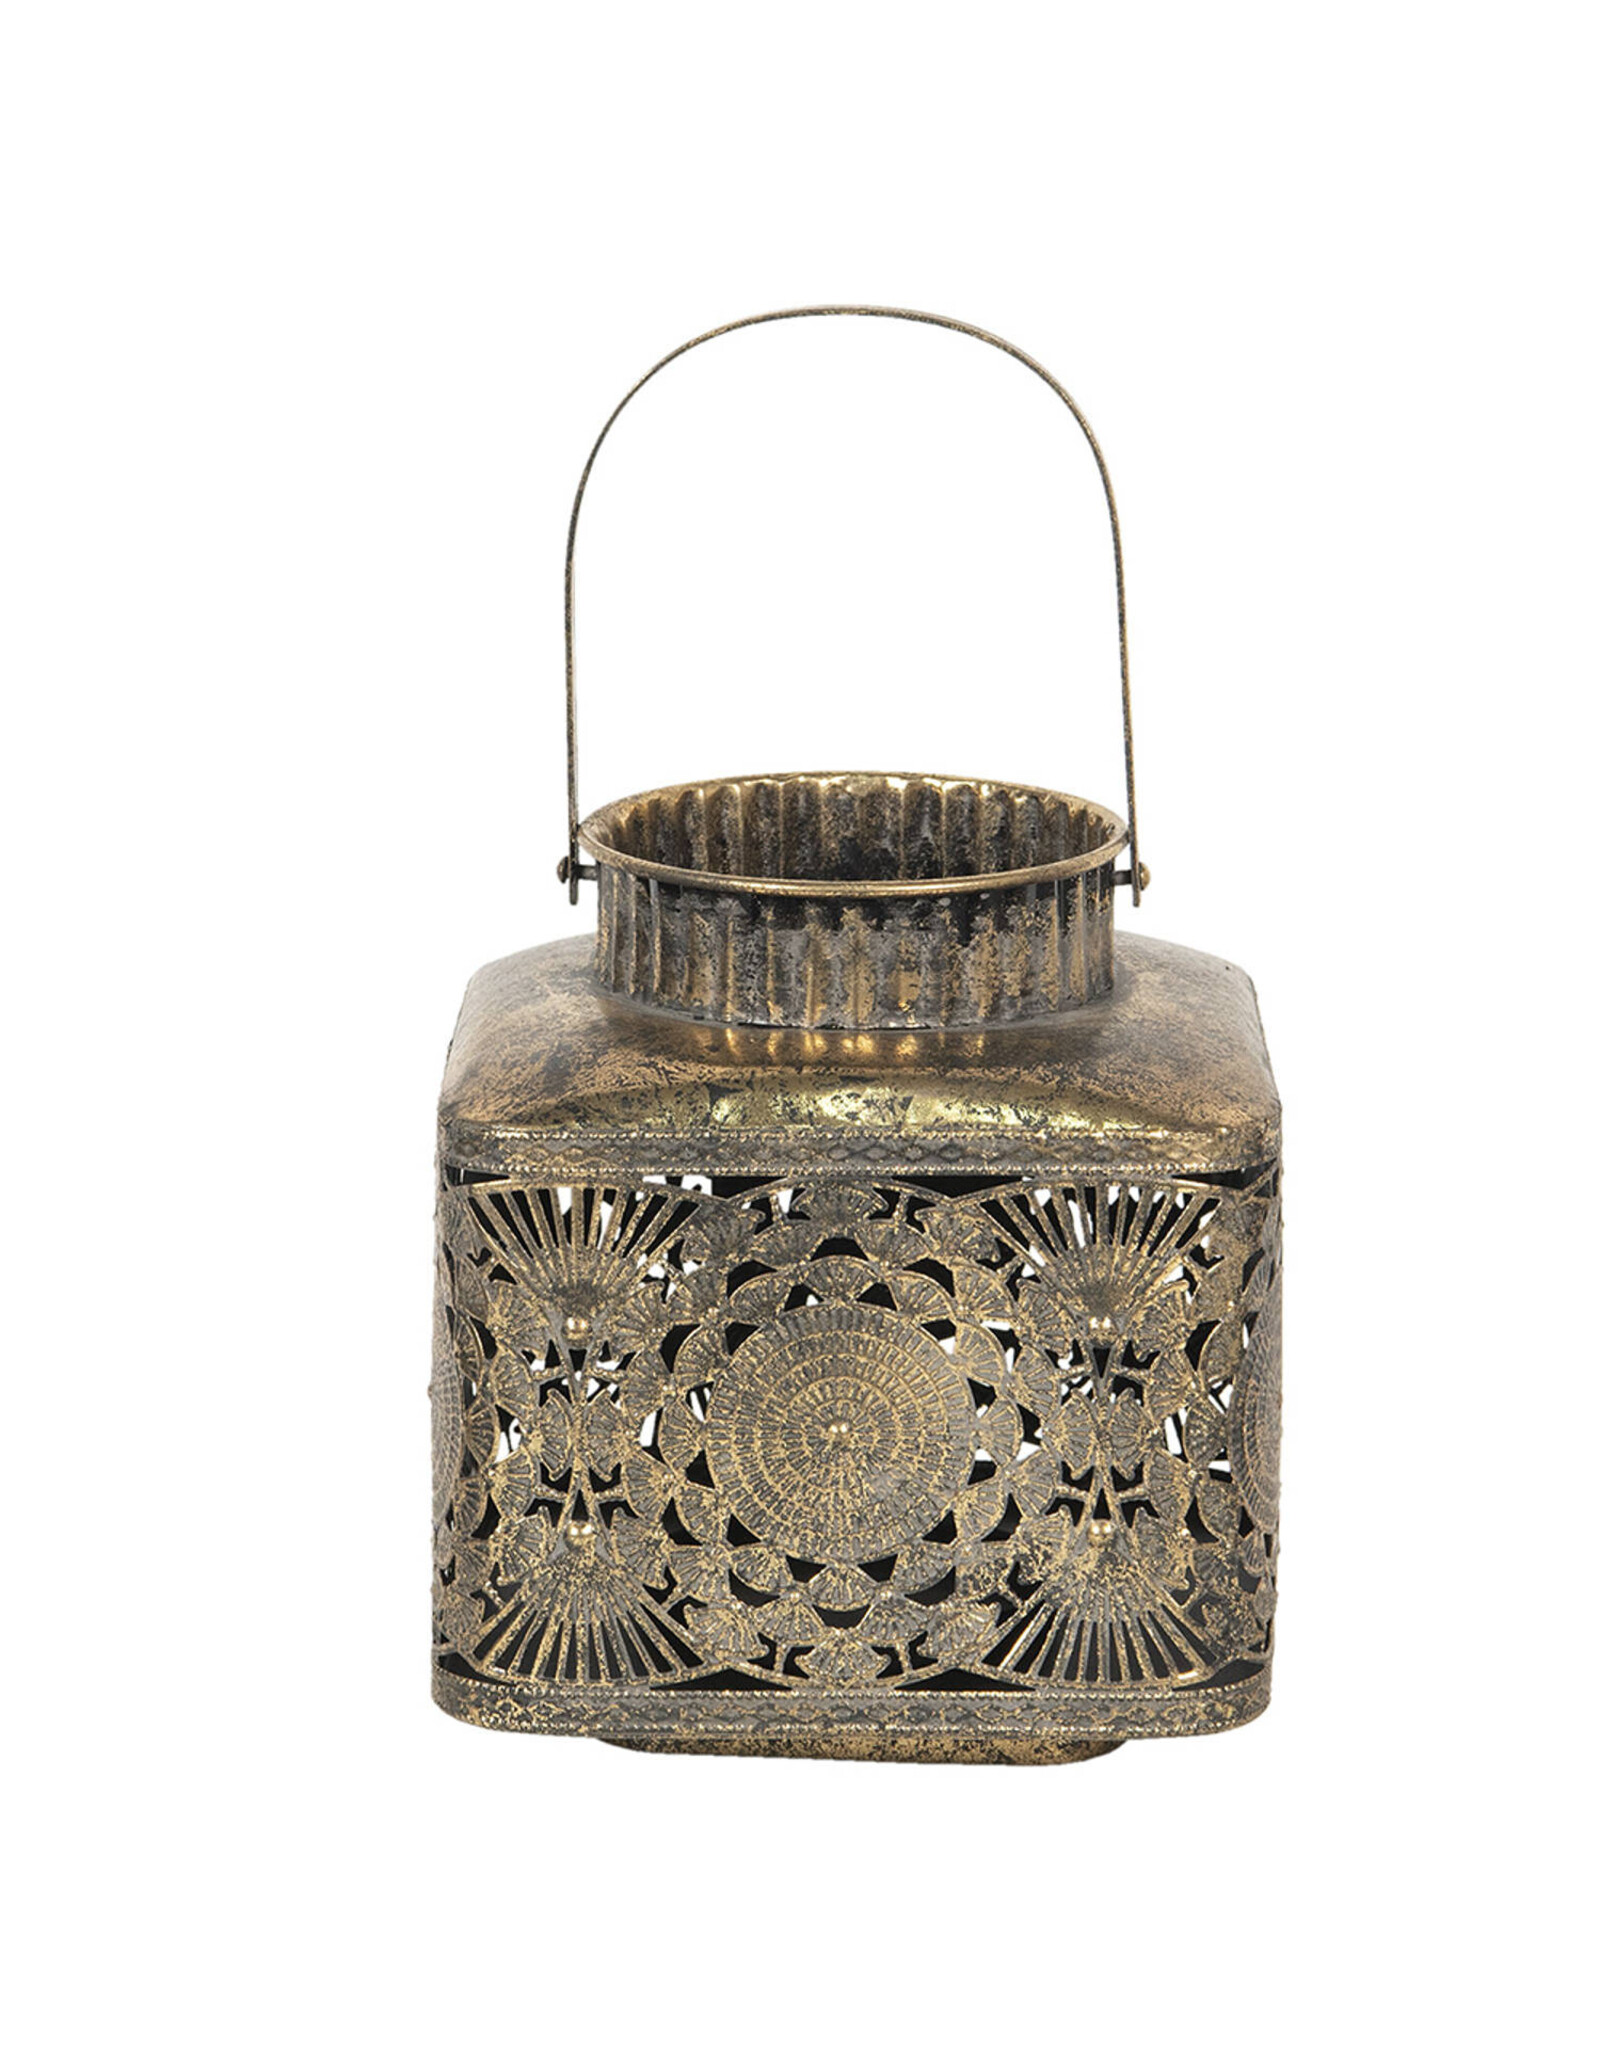 C&E Miscellaneous - Metal Lantern Rural-Industrial Copper colored